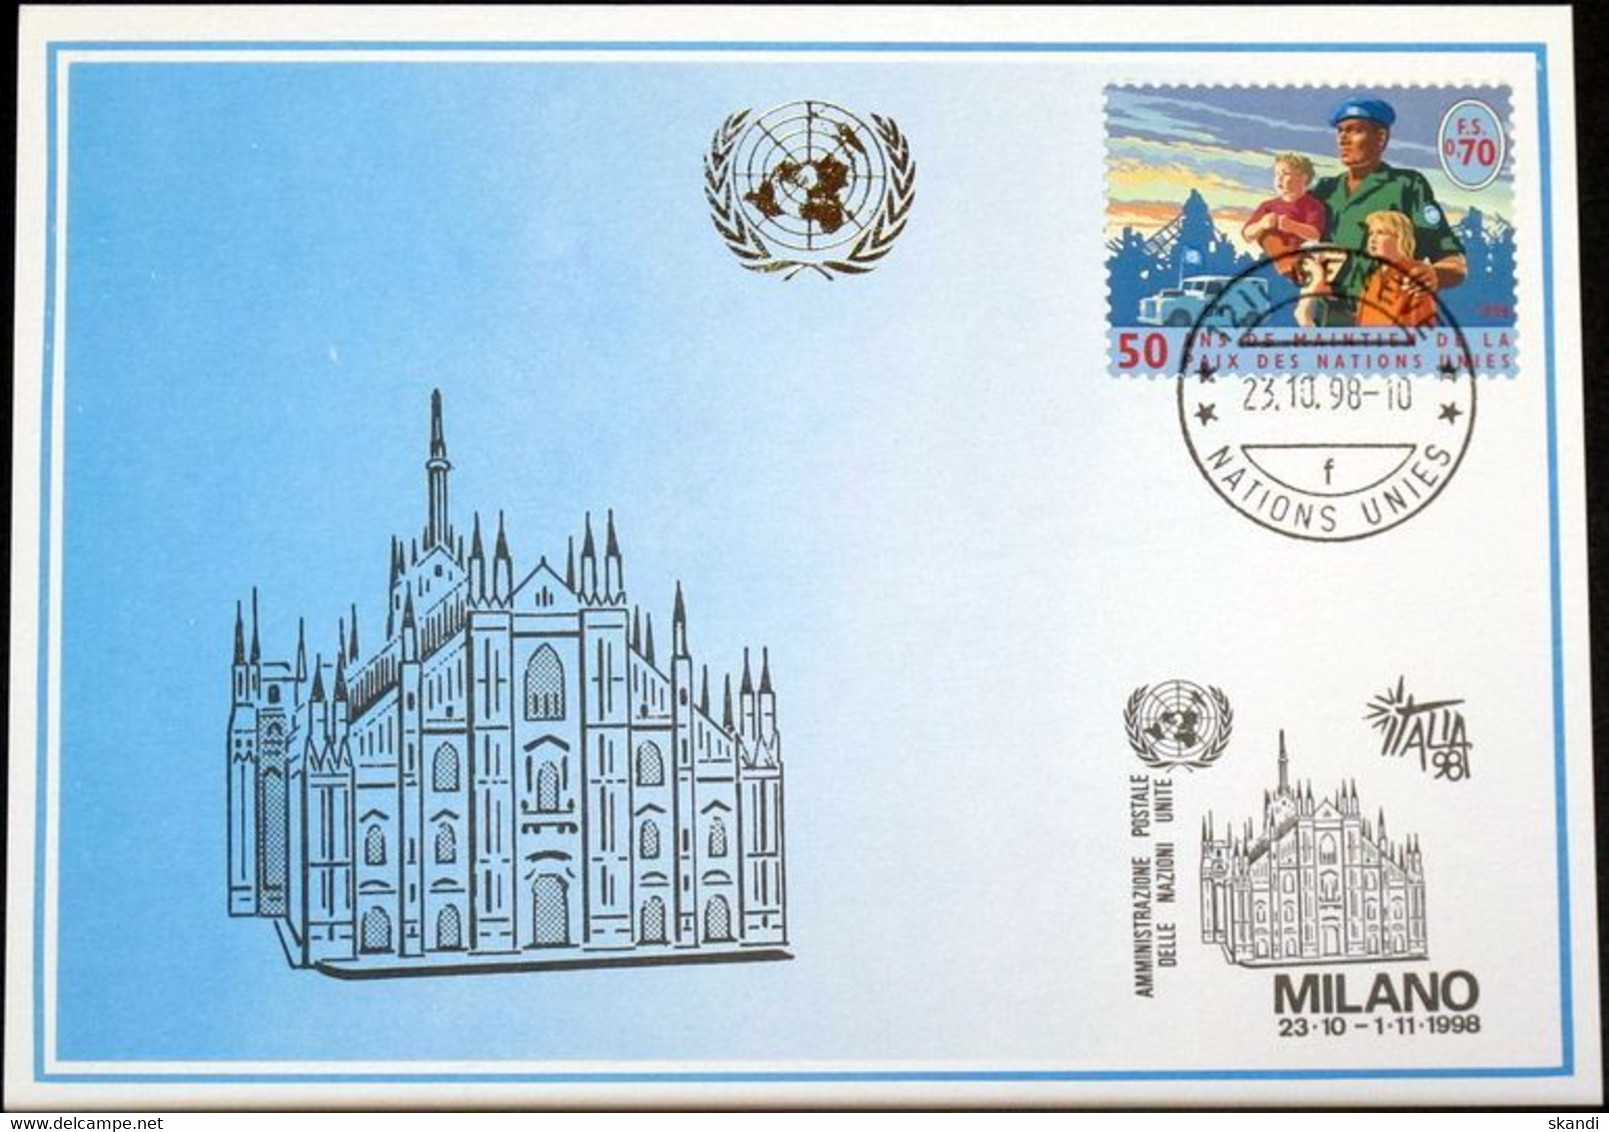 UNO GENF 1998 Mi-Nr. 296 Blaue Karte - Blue Card - Covers & Documents